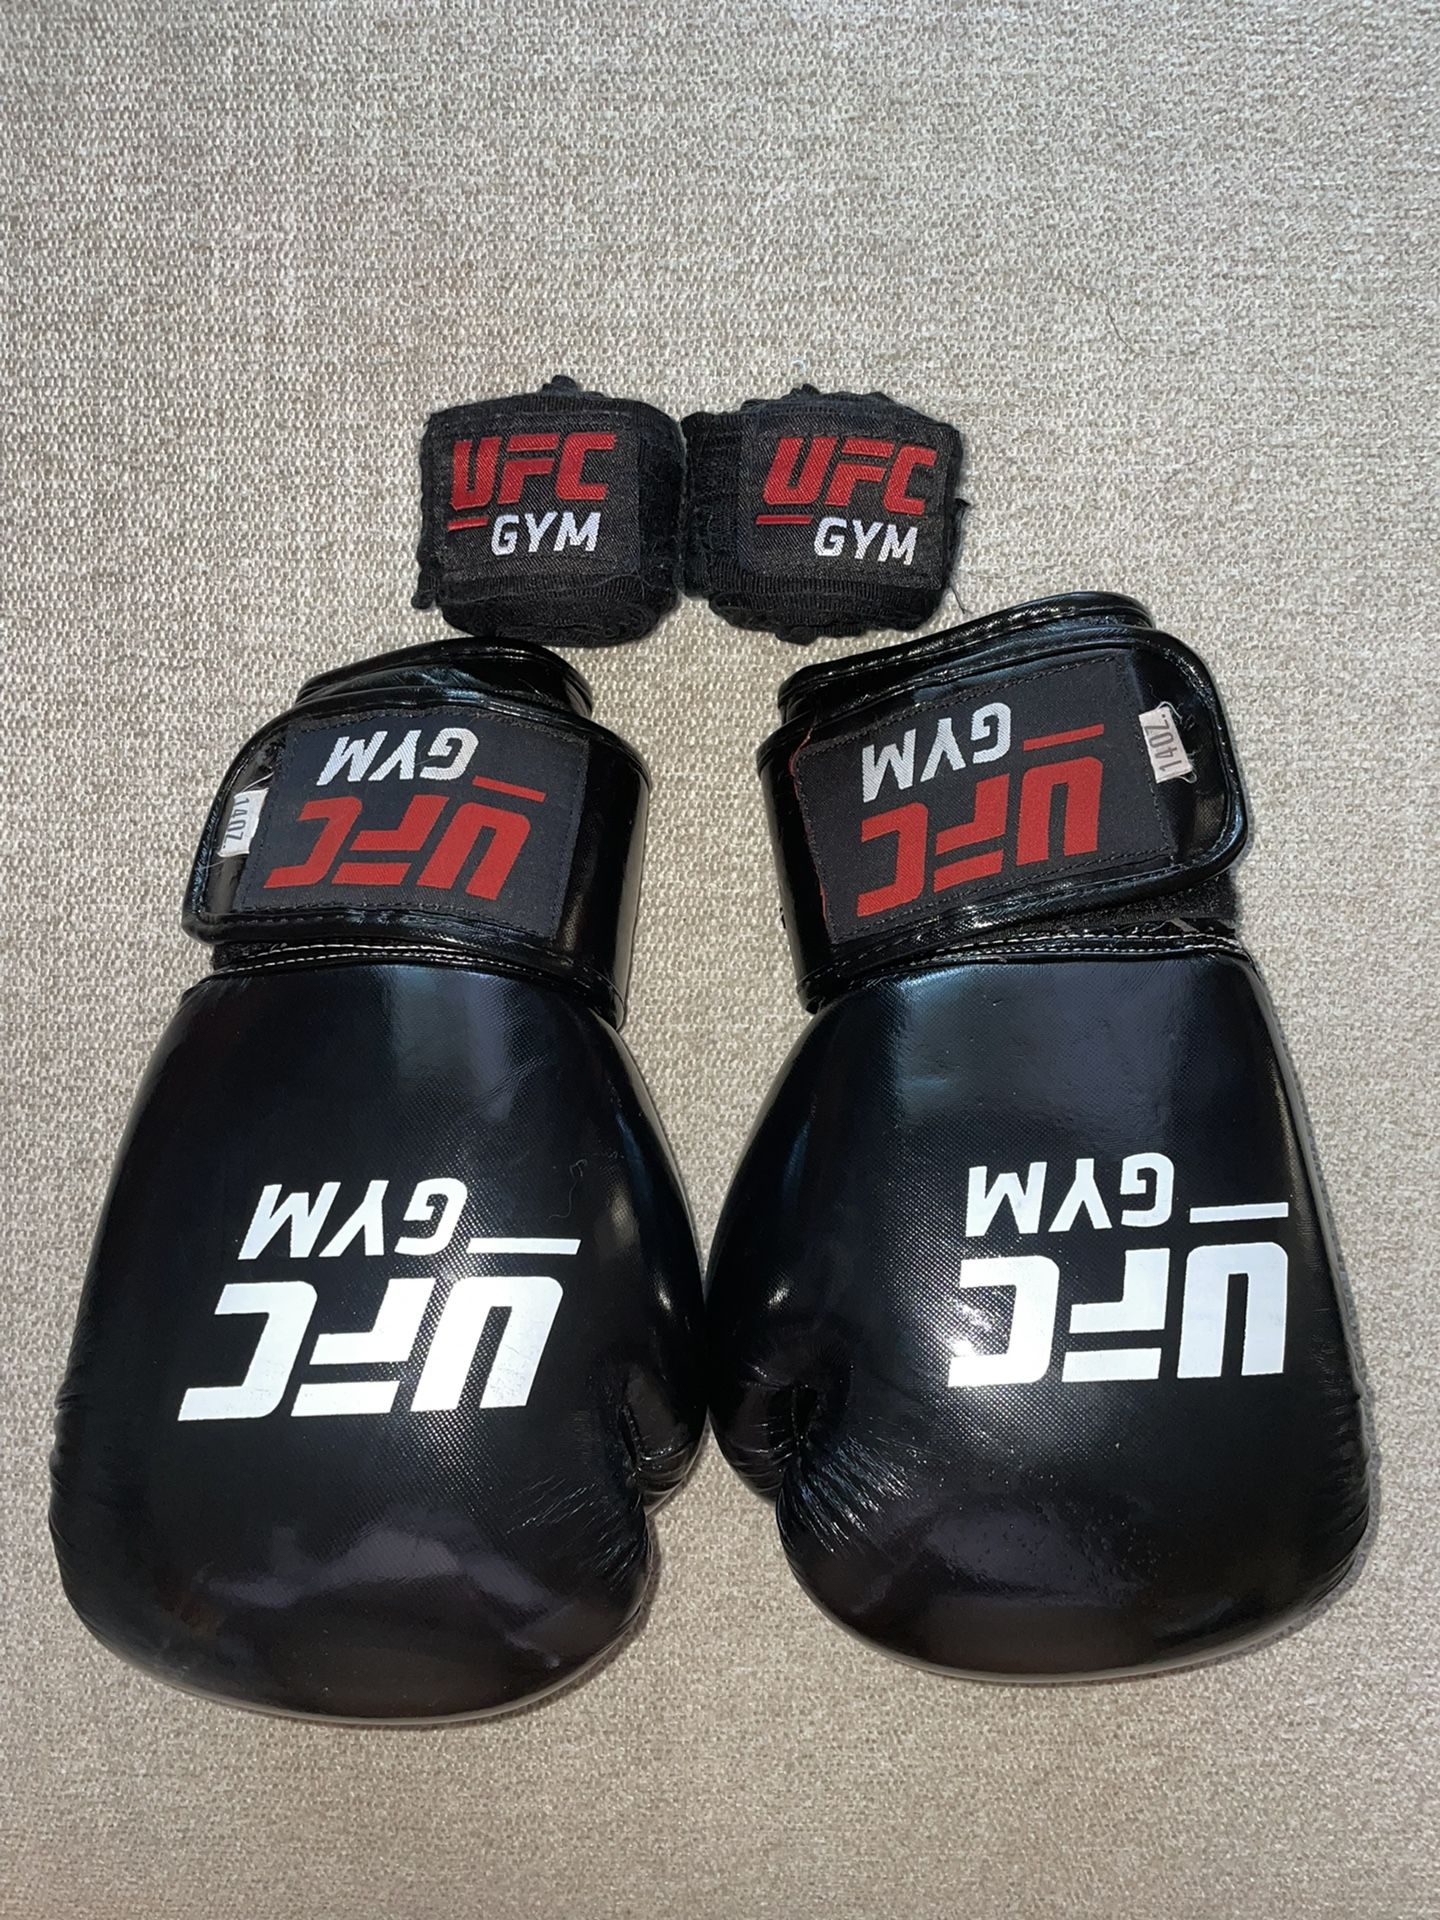 UFC Boxing gloves